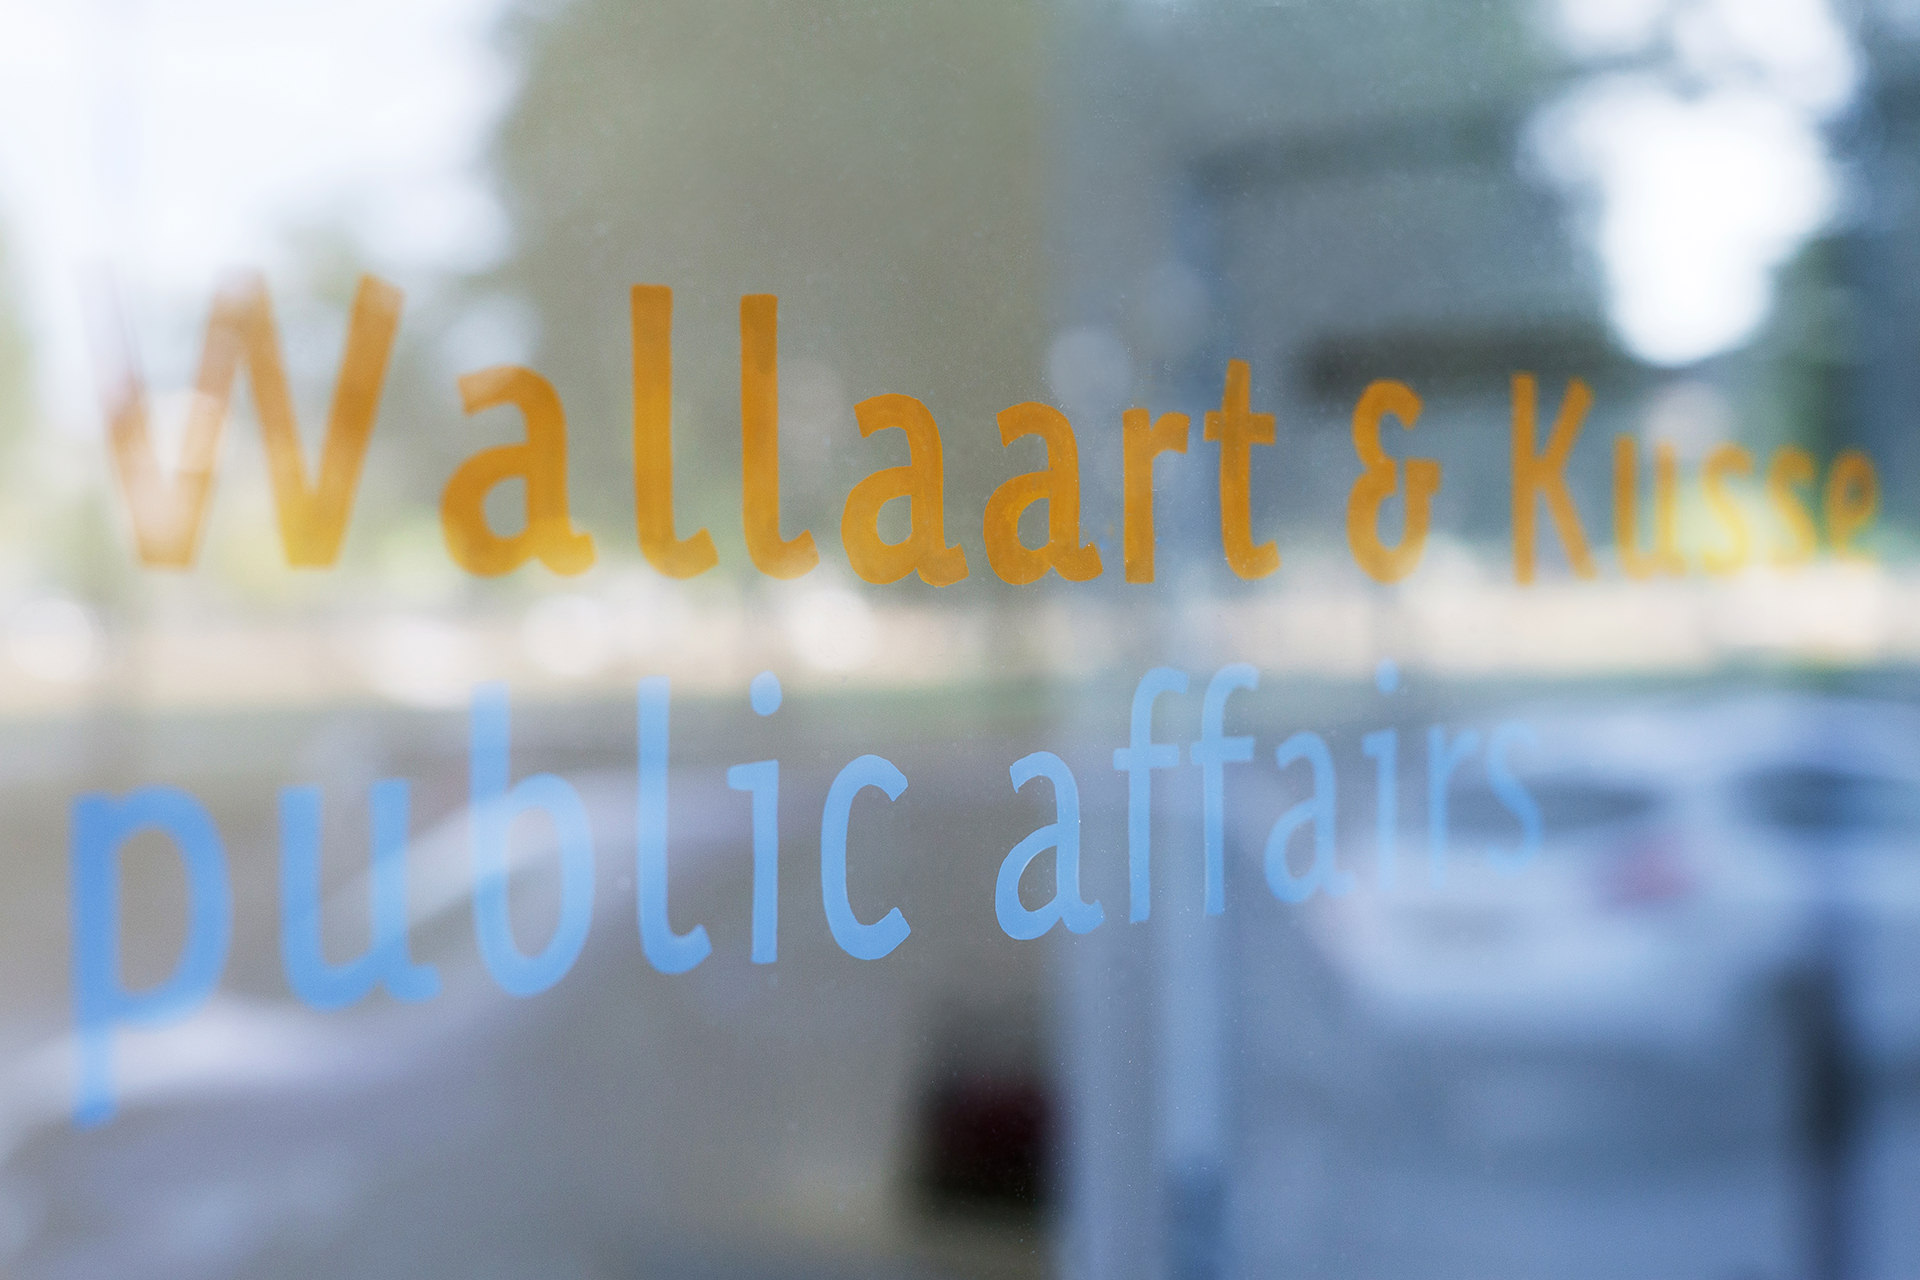 Wallaart & Kusse Public Affairs